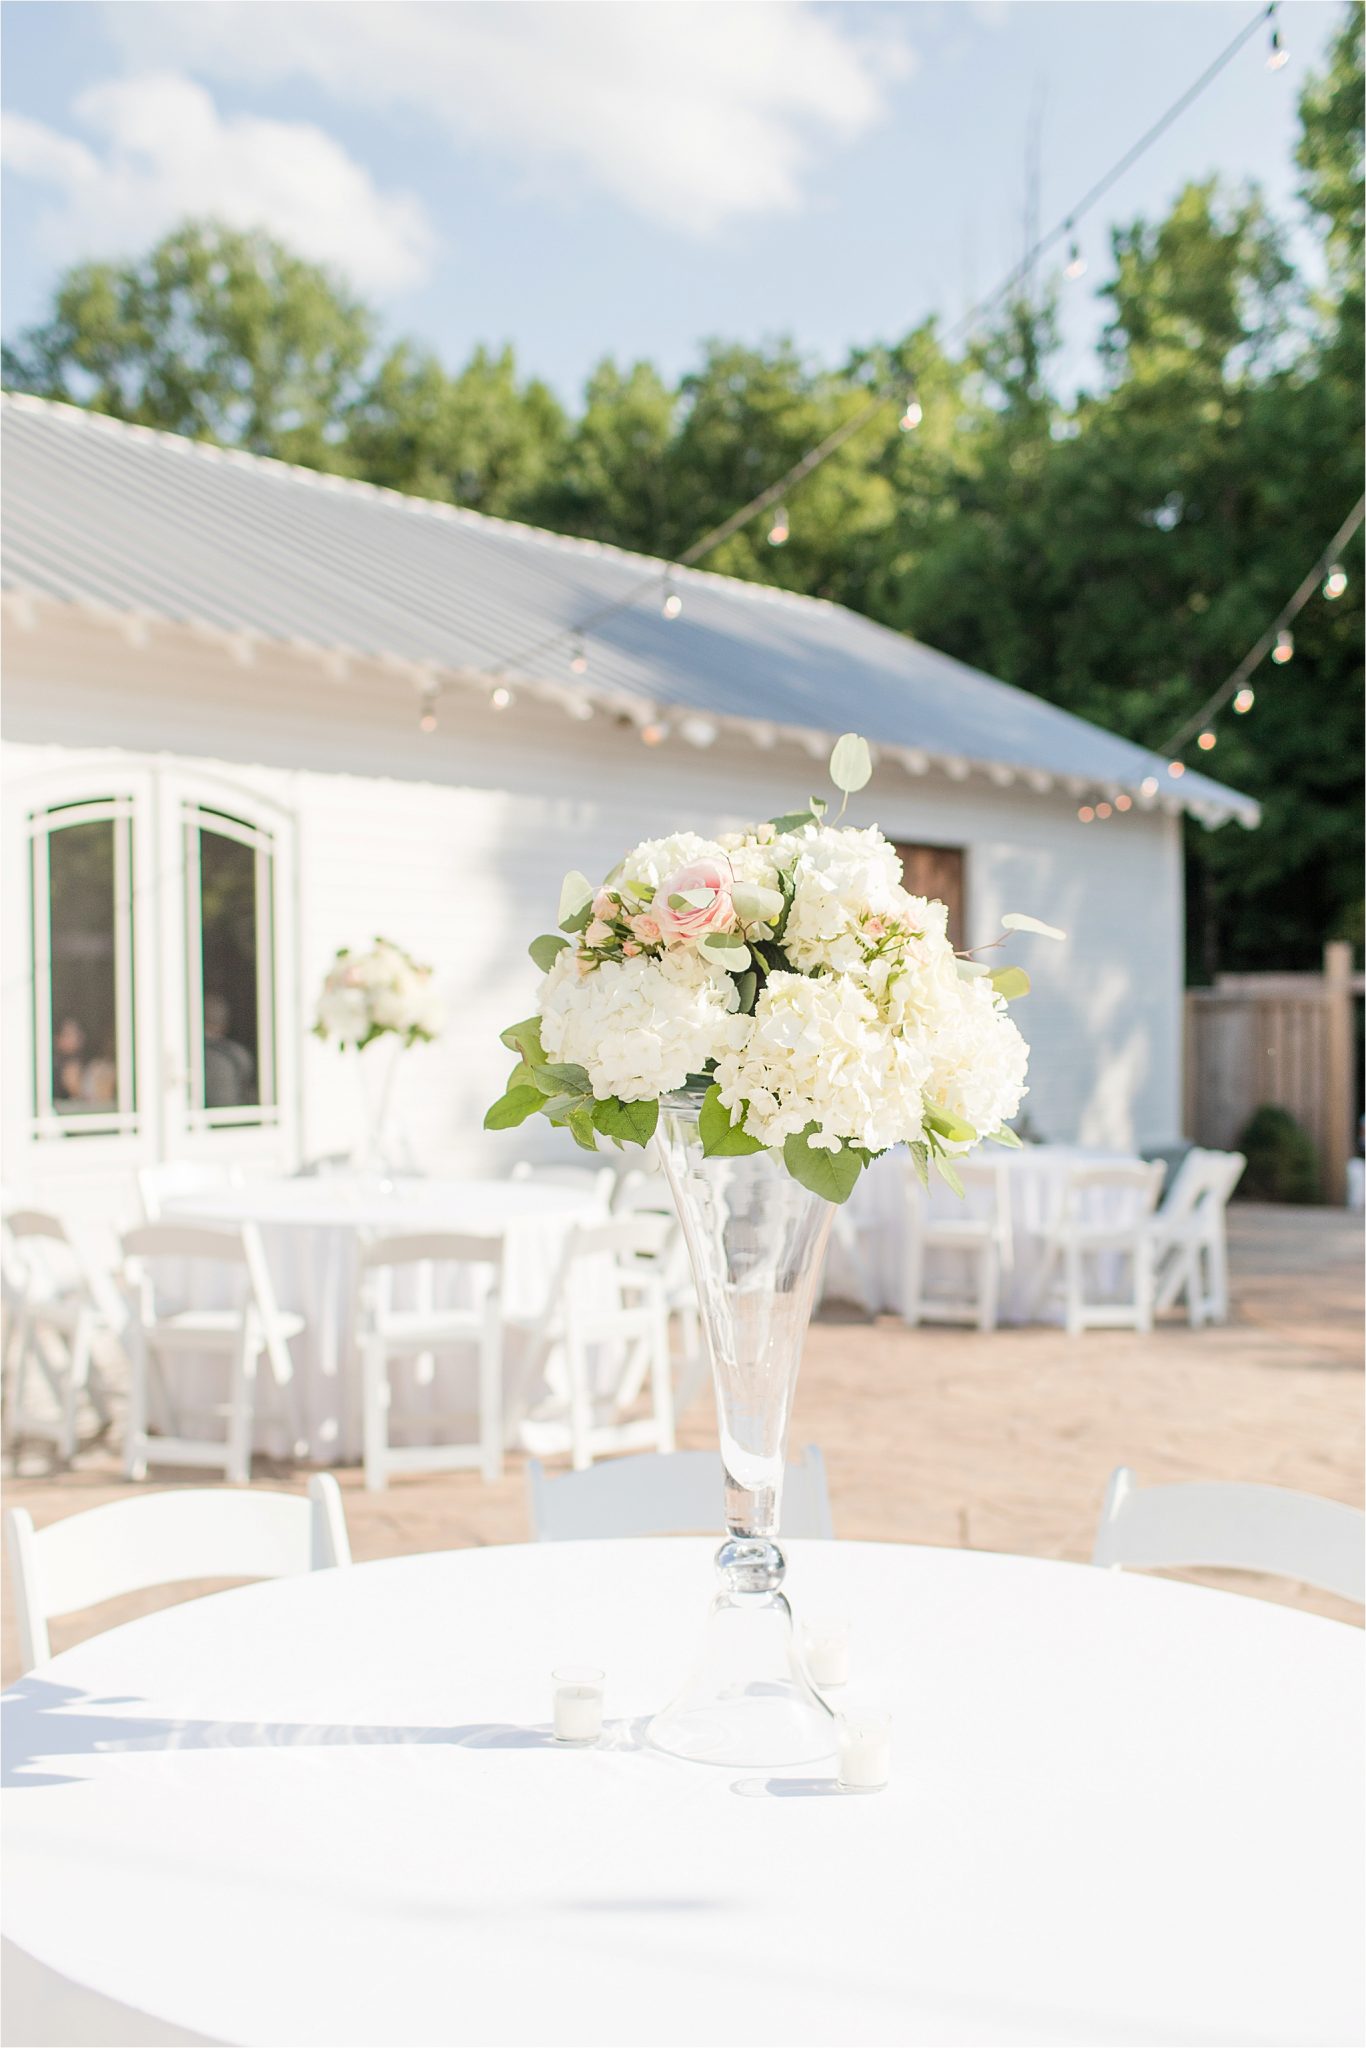 Sonnet House, Birmingham Alabama Wedding Photographer, Wedding florals, Wedding venue, Wedding details